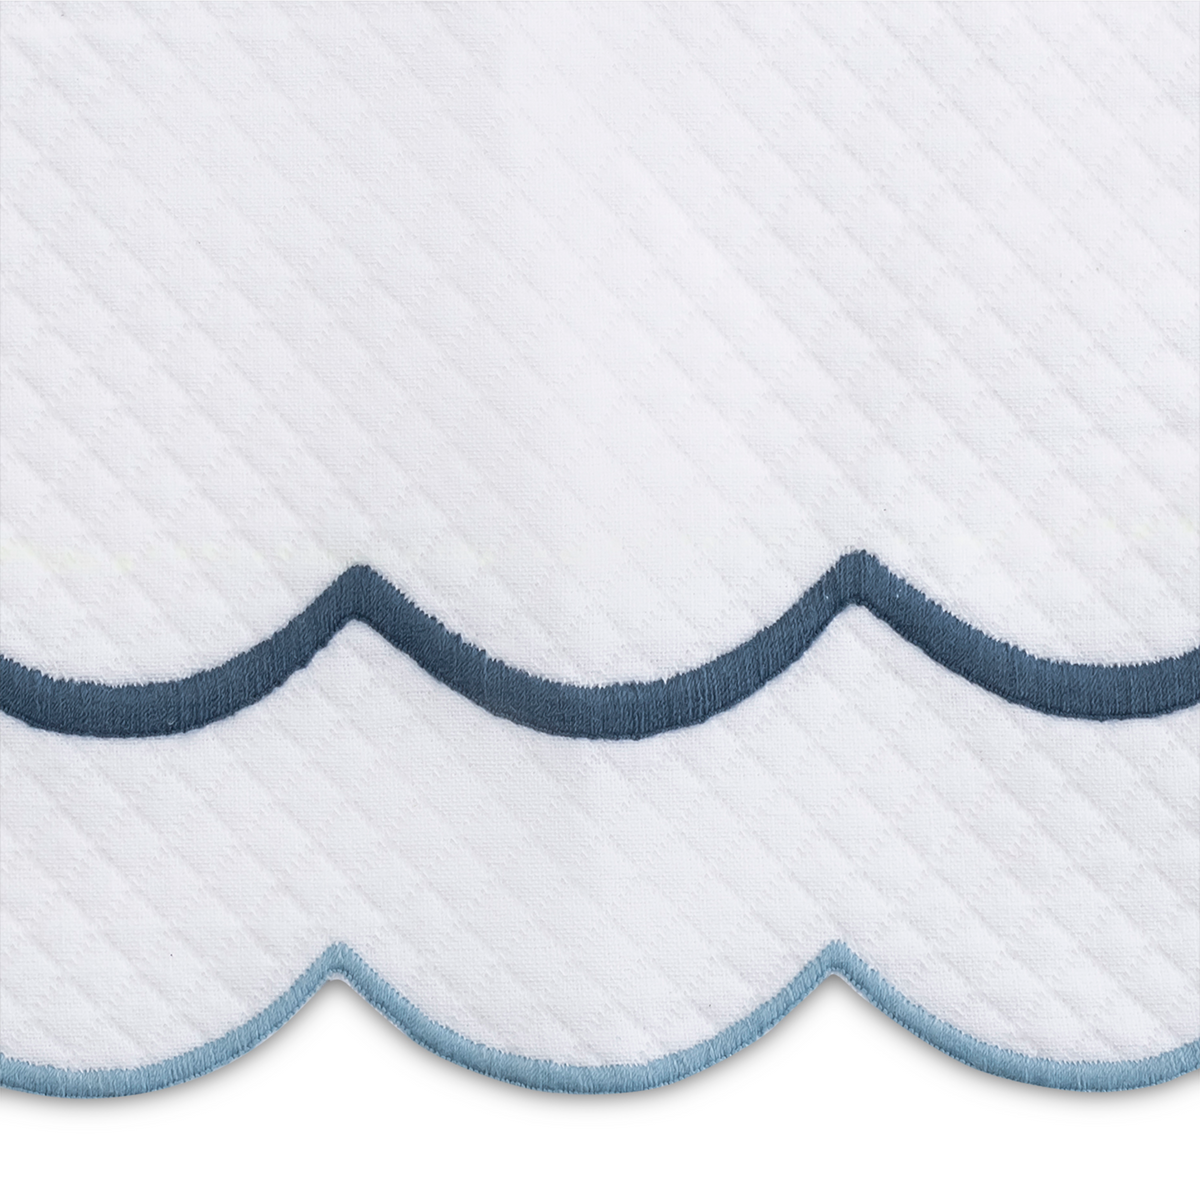 Closeup of Matouk India Pique Bedding Swatch Sample in Hazy Blue Color Fine Linen